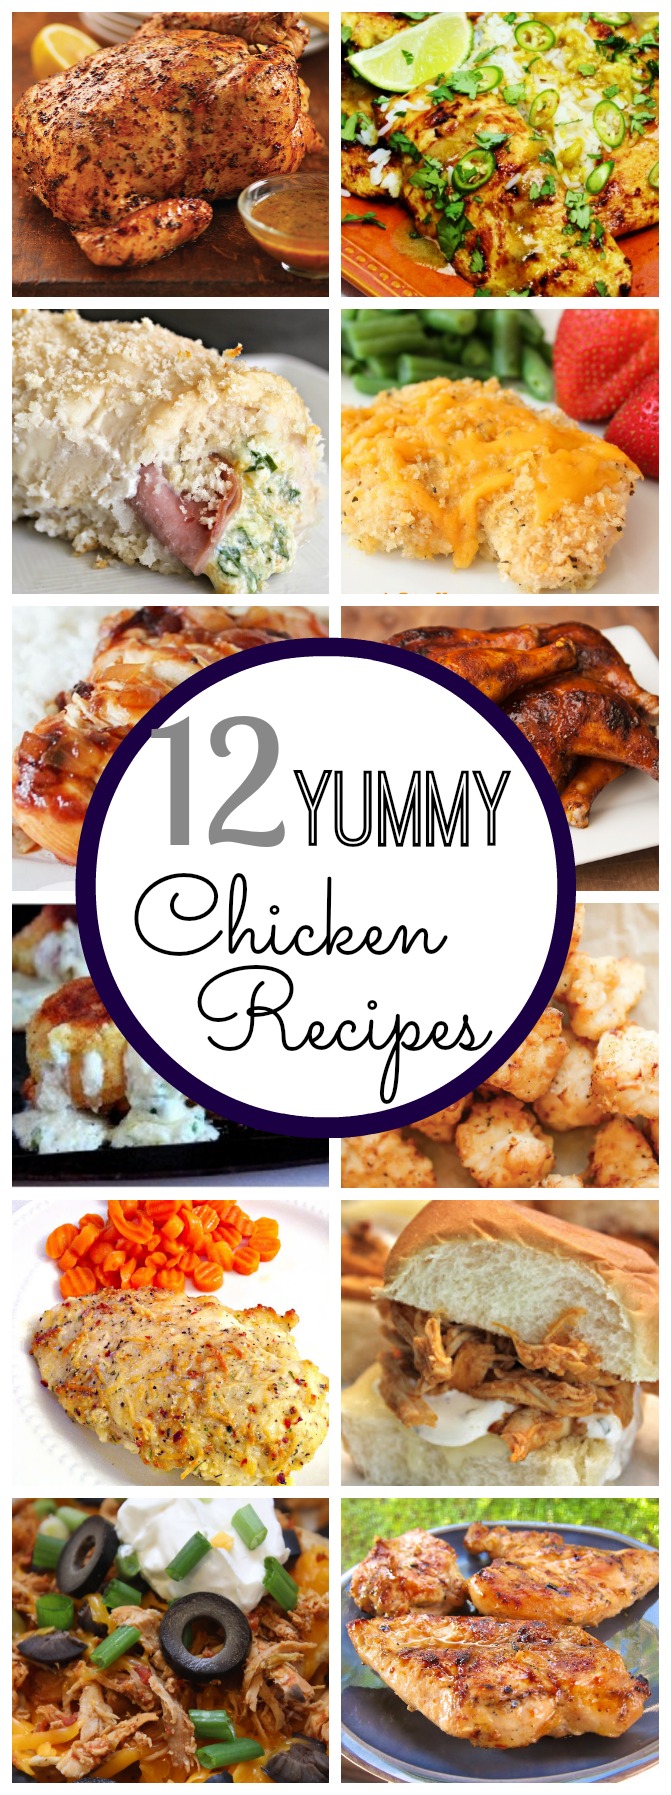 Yummy Chicken Recipes